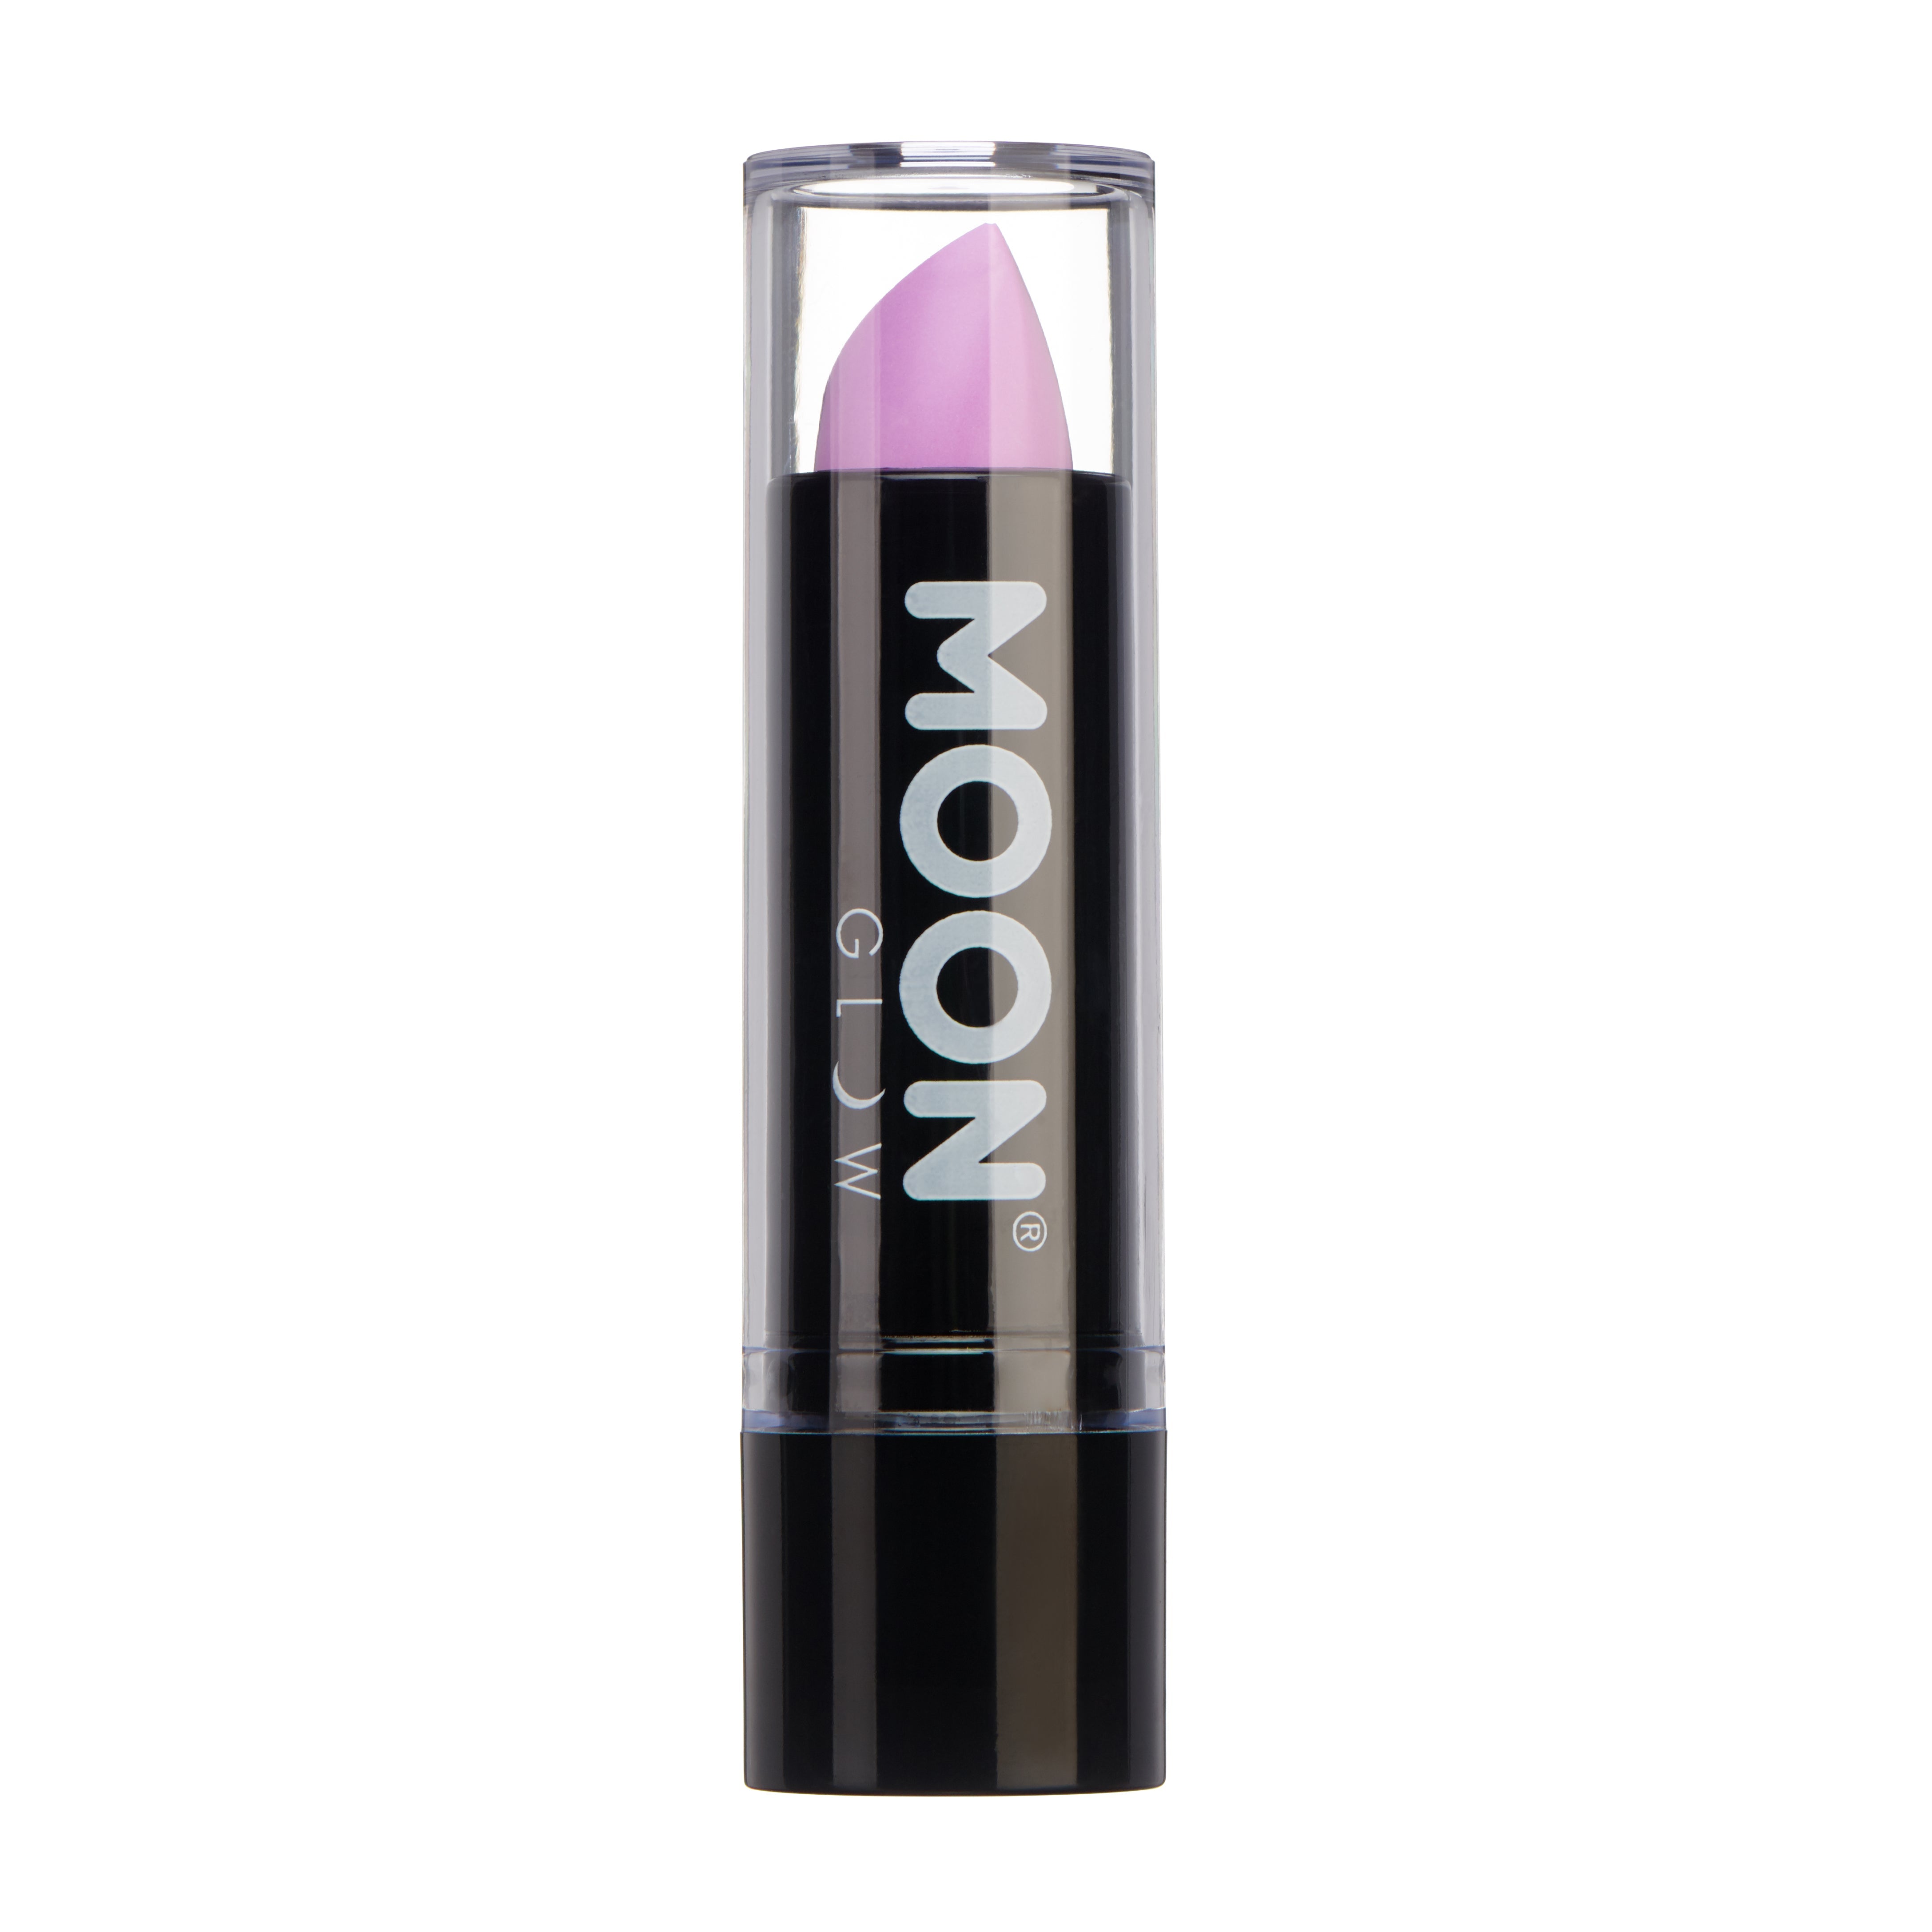 Pastel Lilac - Neon UV Glow Blacklight Lipstick, 5g. Cosmetically certified, FDA & Health Canada compliant and cruelty free.